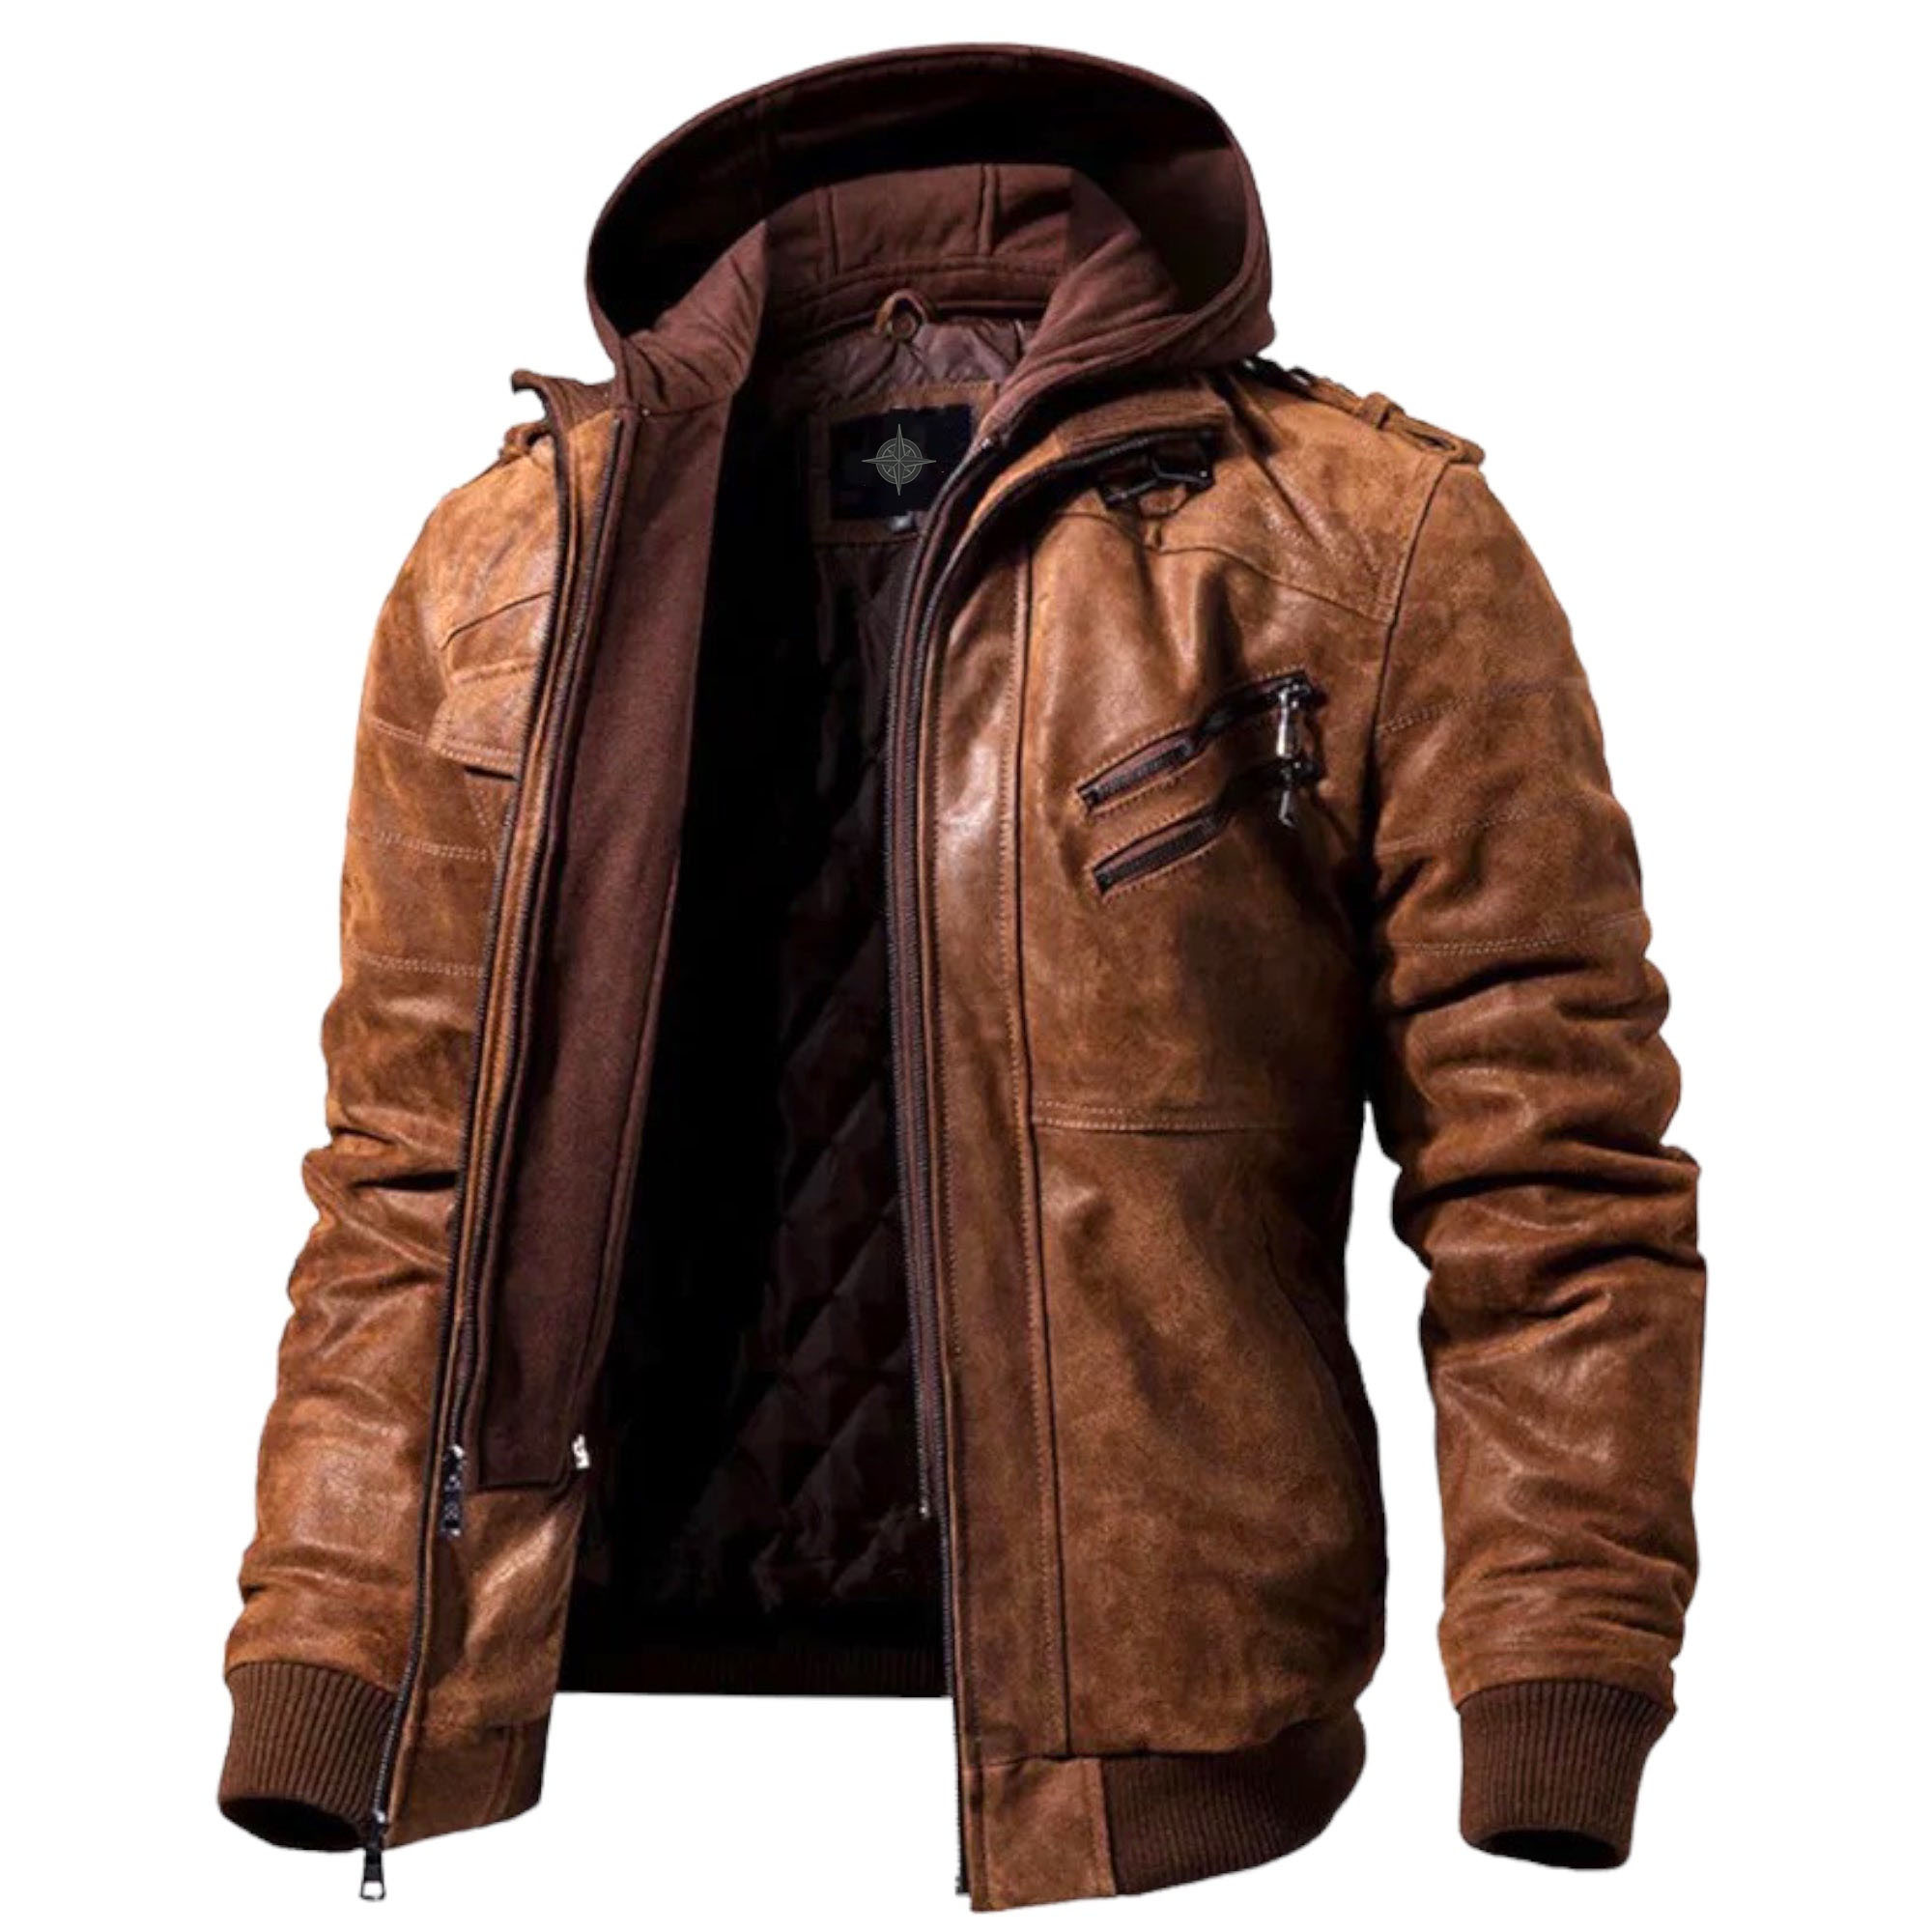 'Mysteron' Leather Jacket